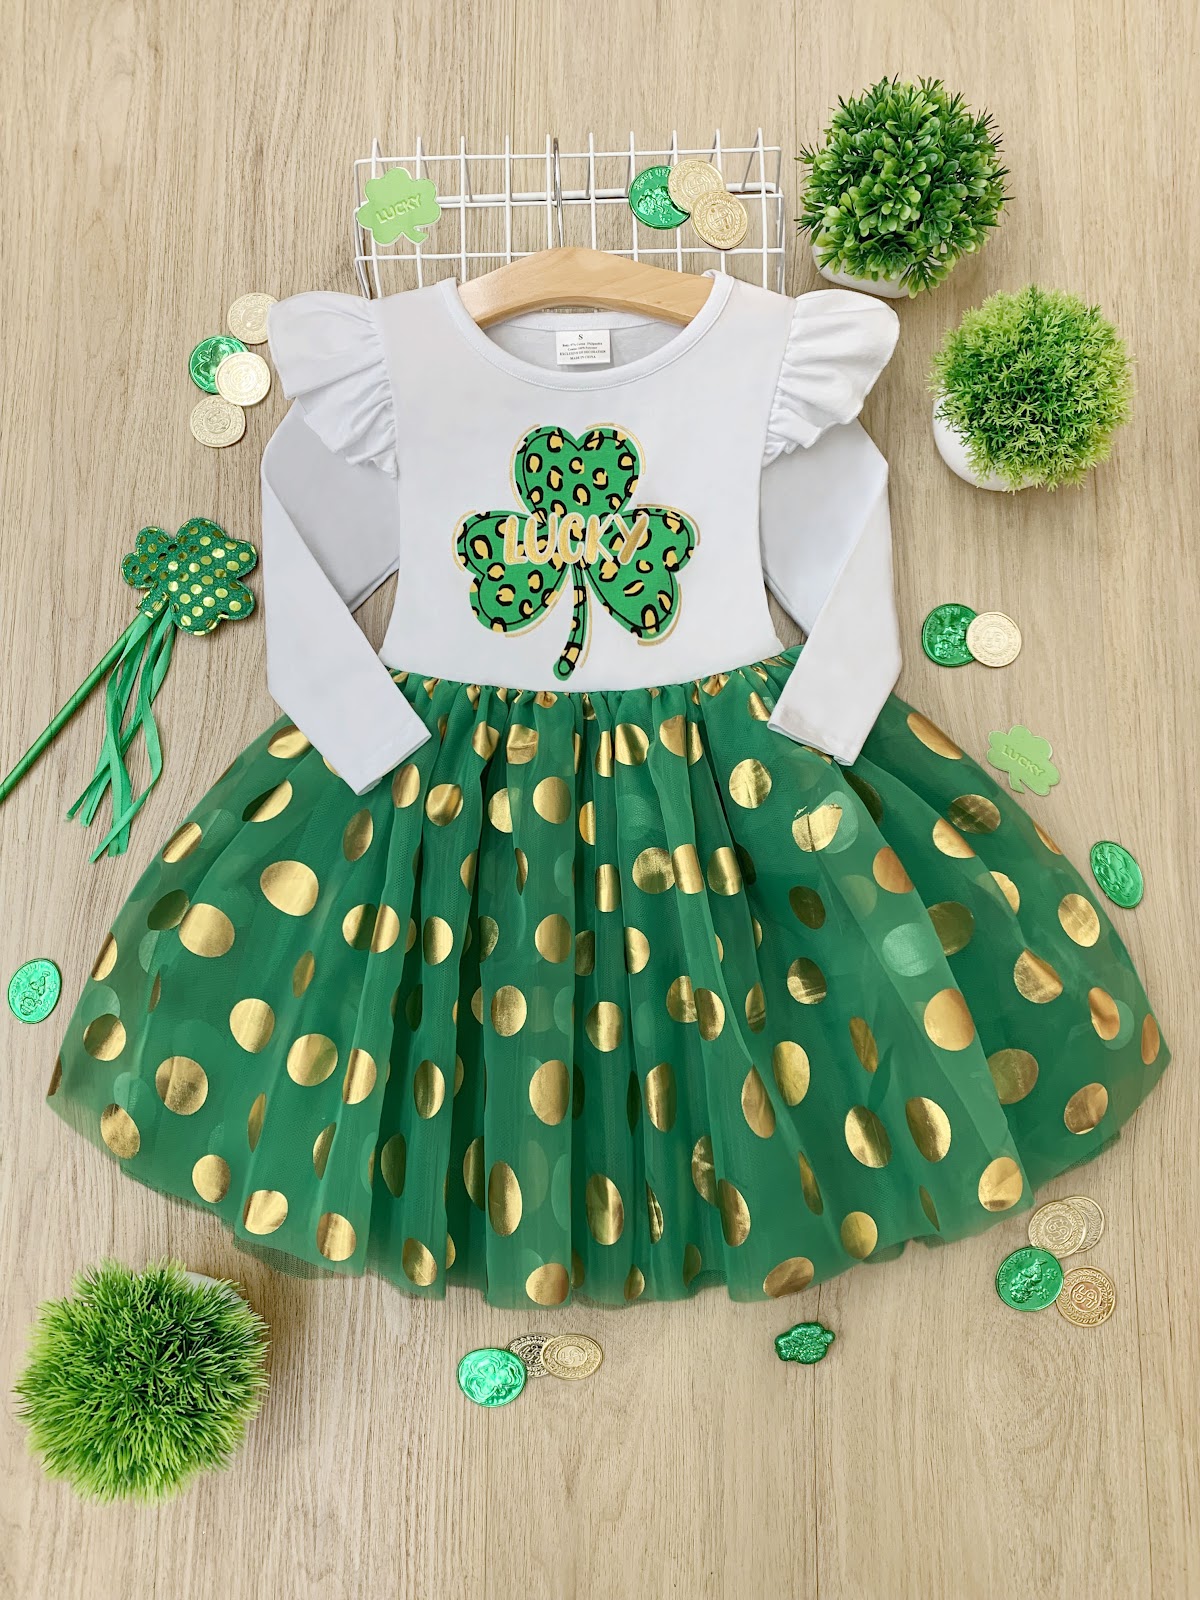 St. Patrick's Day Dress | Little Girls Golden Polka Dot Tutu Dress